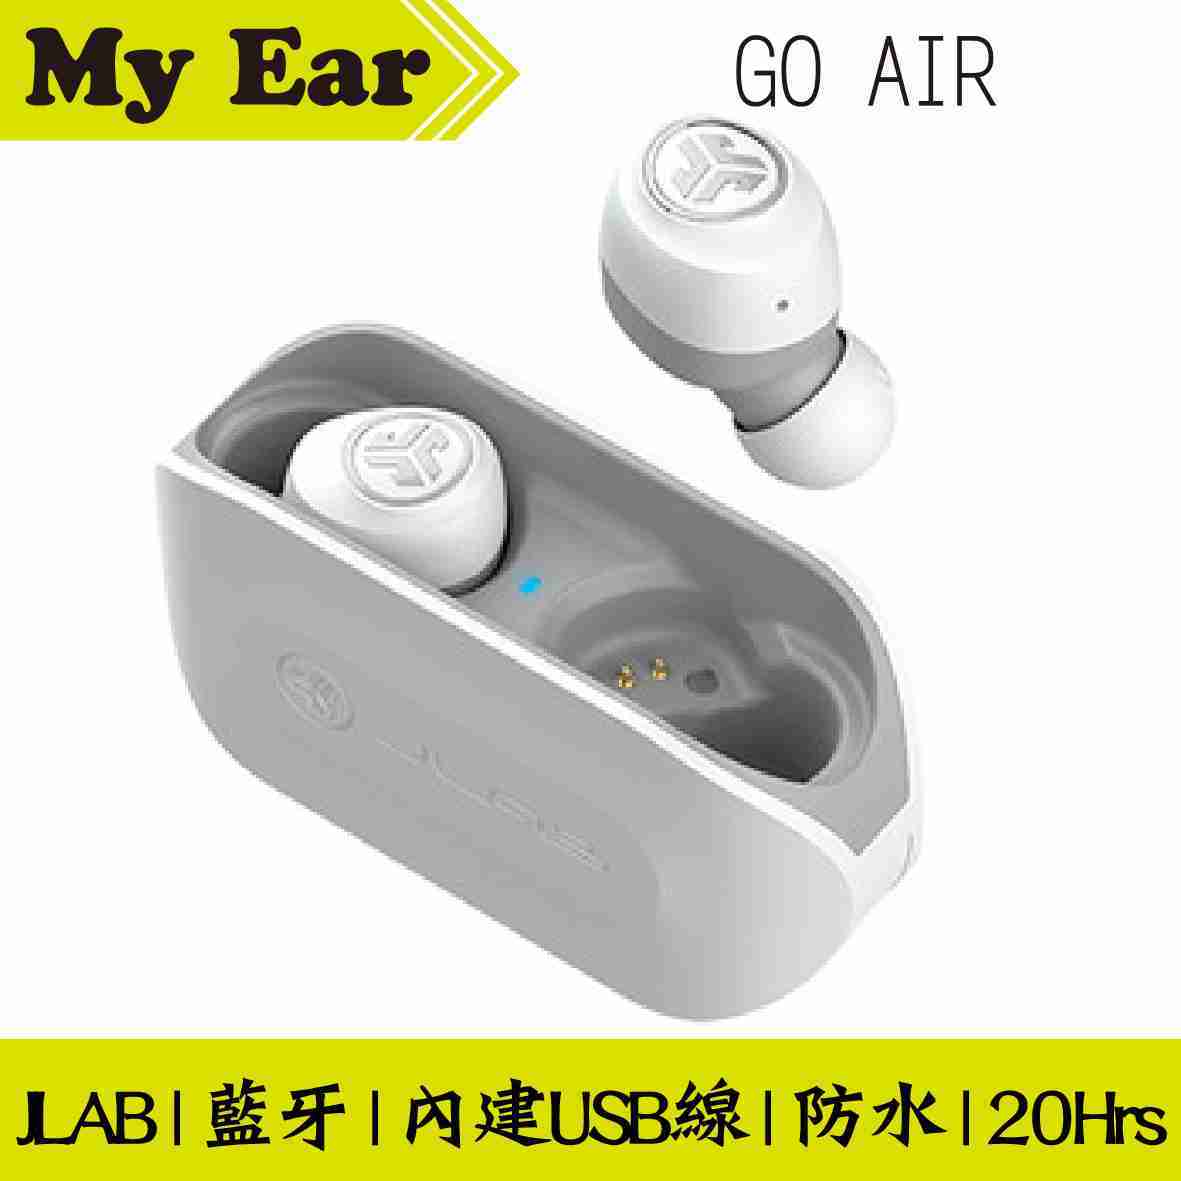 JLAB GO AIR 綠 藍芽耳機 真無線耳機 IP44 續航20Hrs | My Ear耳機專門店